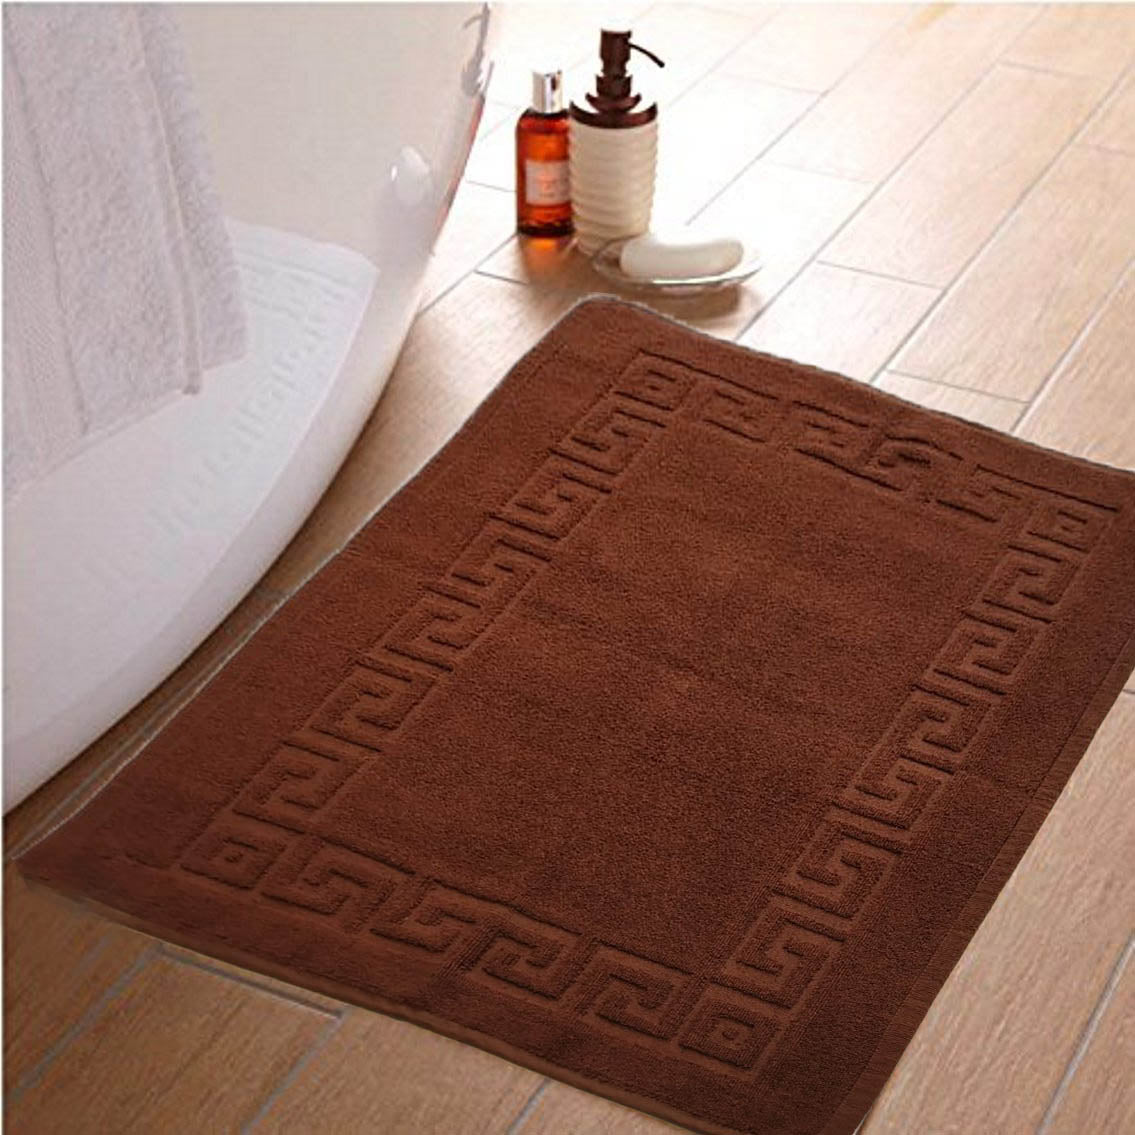 Lushomes bathroom Mat, Super Soft Terry Cotton Floor mat for Hotel and Spa, Door Mats for Bathmat with Greek Border, Floor Towel Mat, cotton mat (Single Pc, Brown, 50x77 cms)